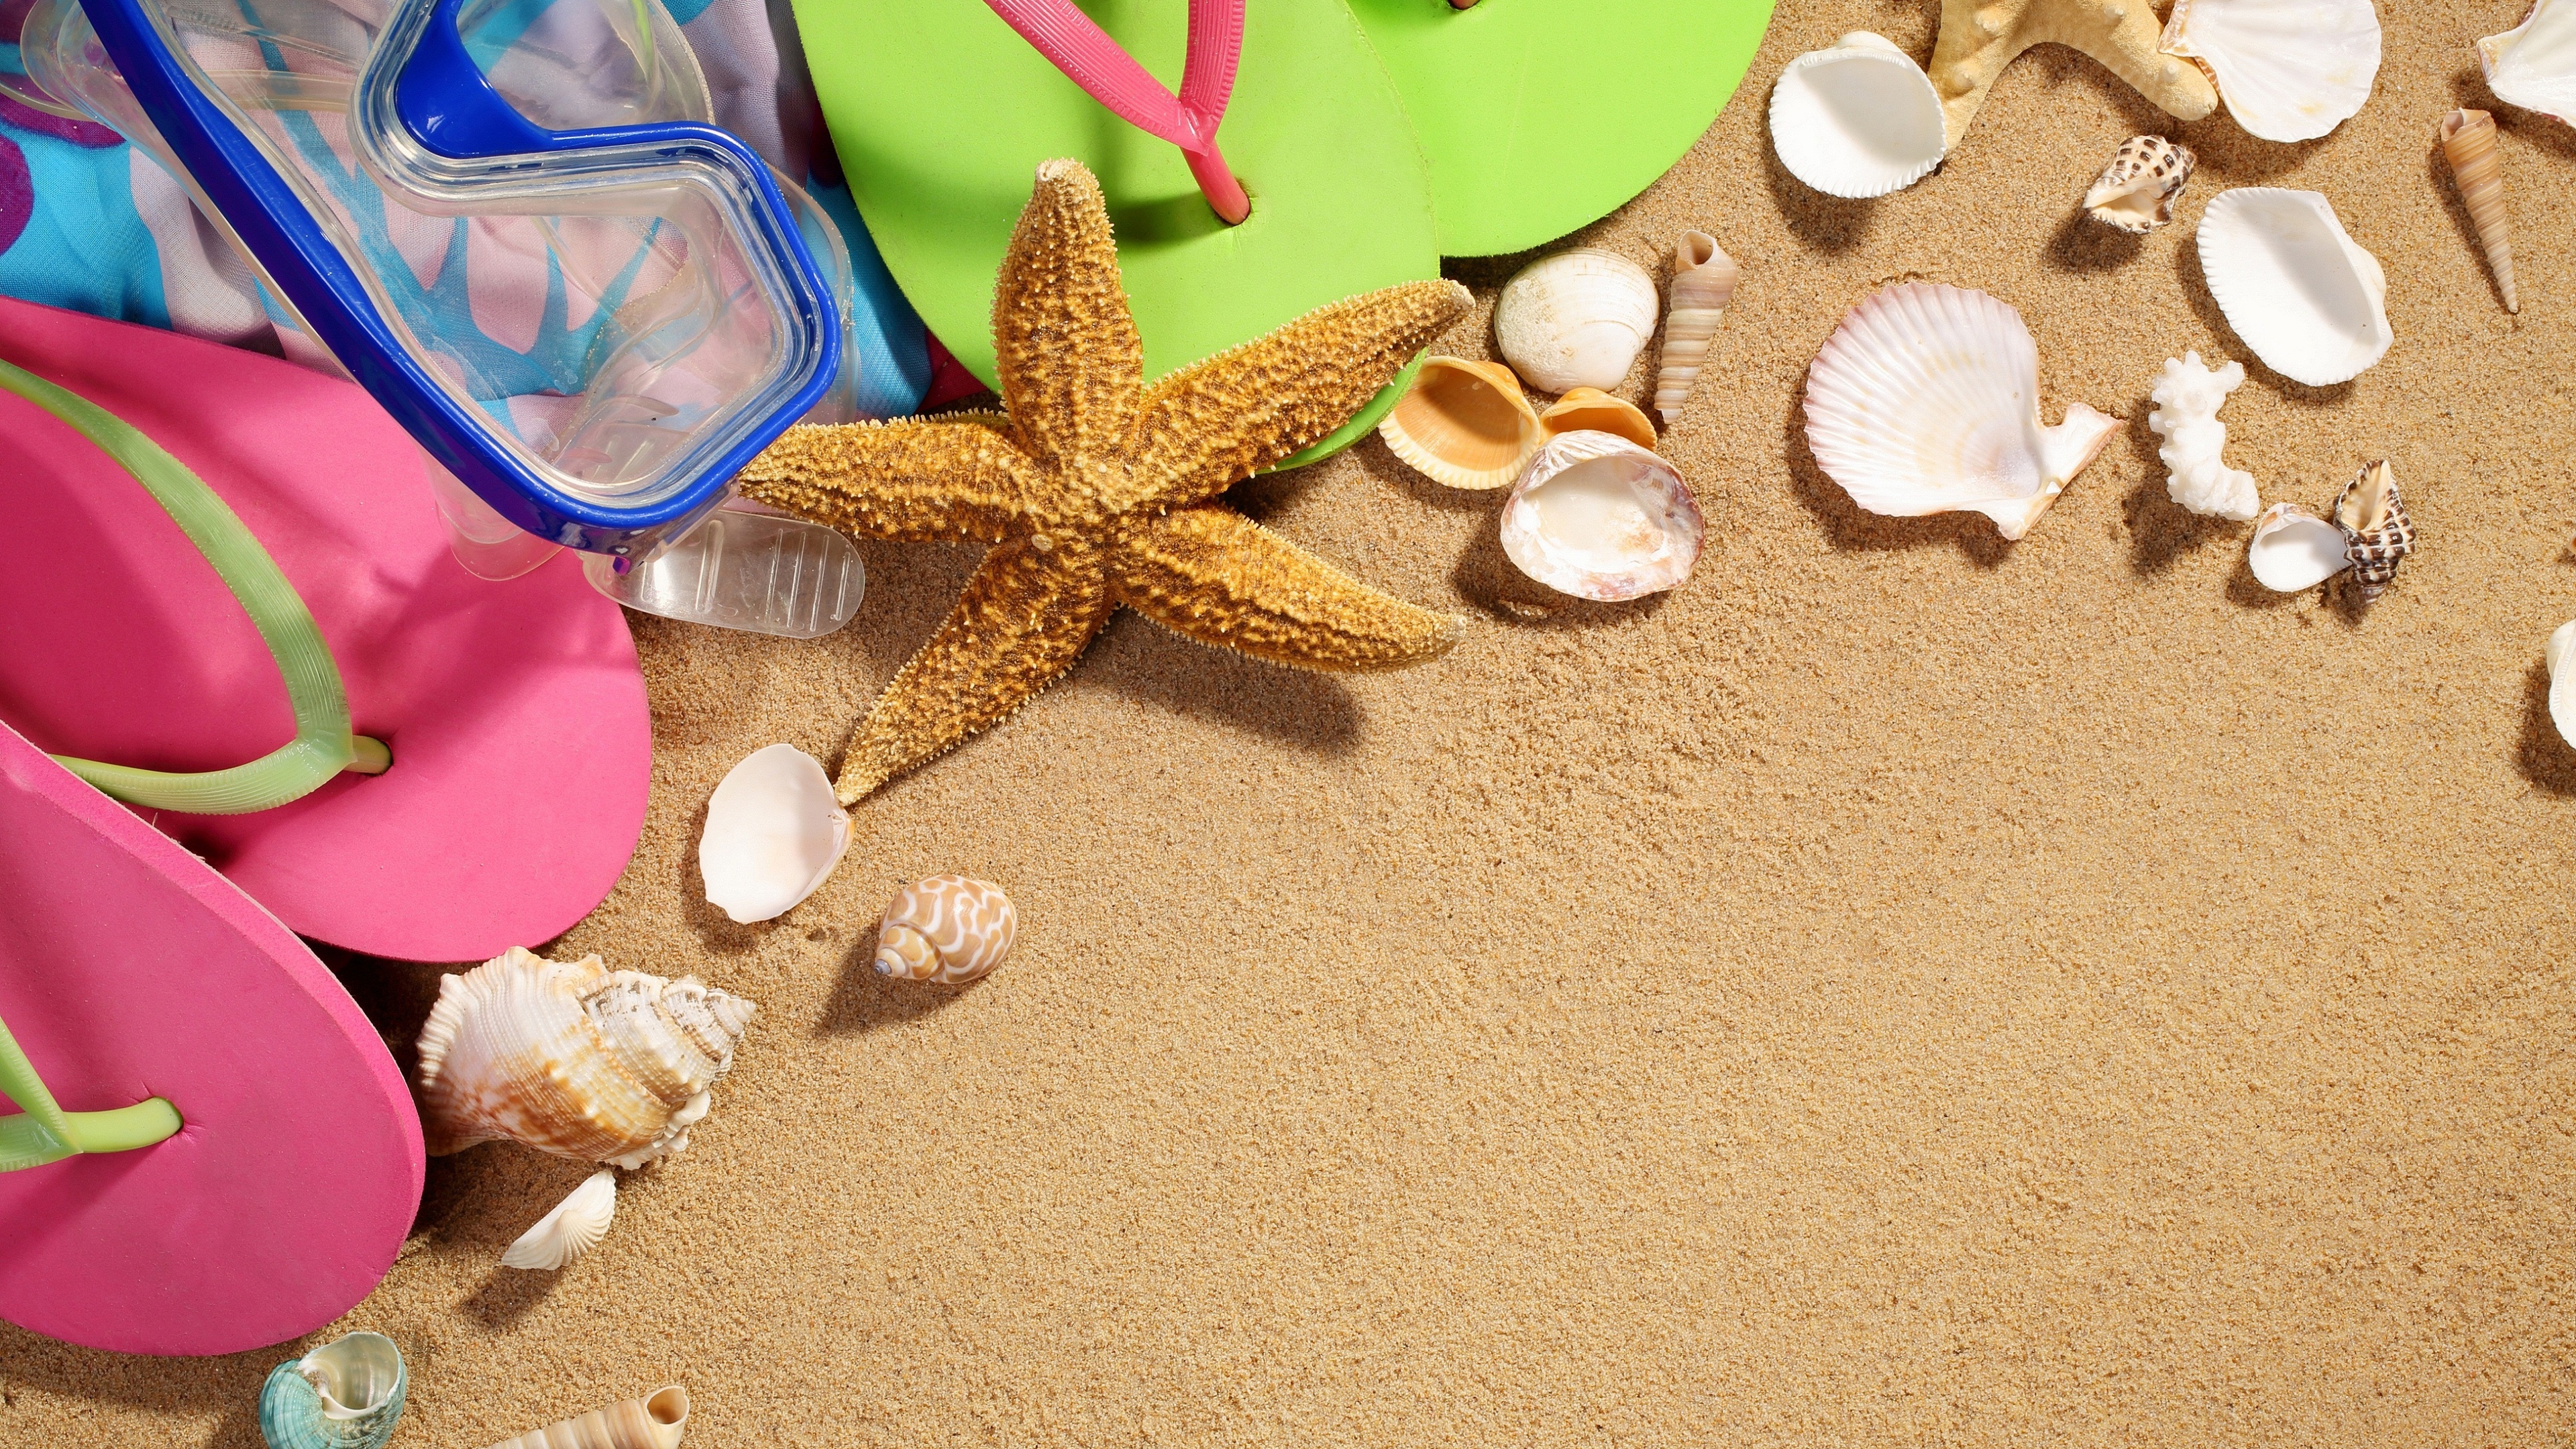 Wallpaper Beach, Starfish, Shell, Sand, Flip Flop - Papel De Parede De Estrela Do Mar E Areia - HD Wallpaper 